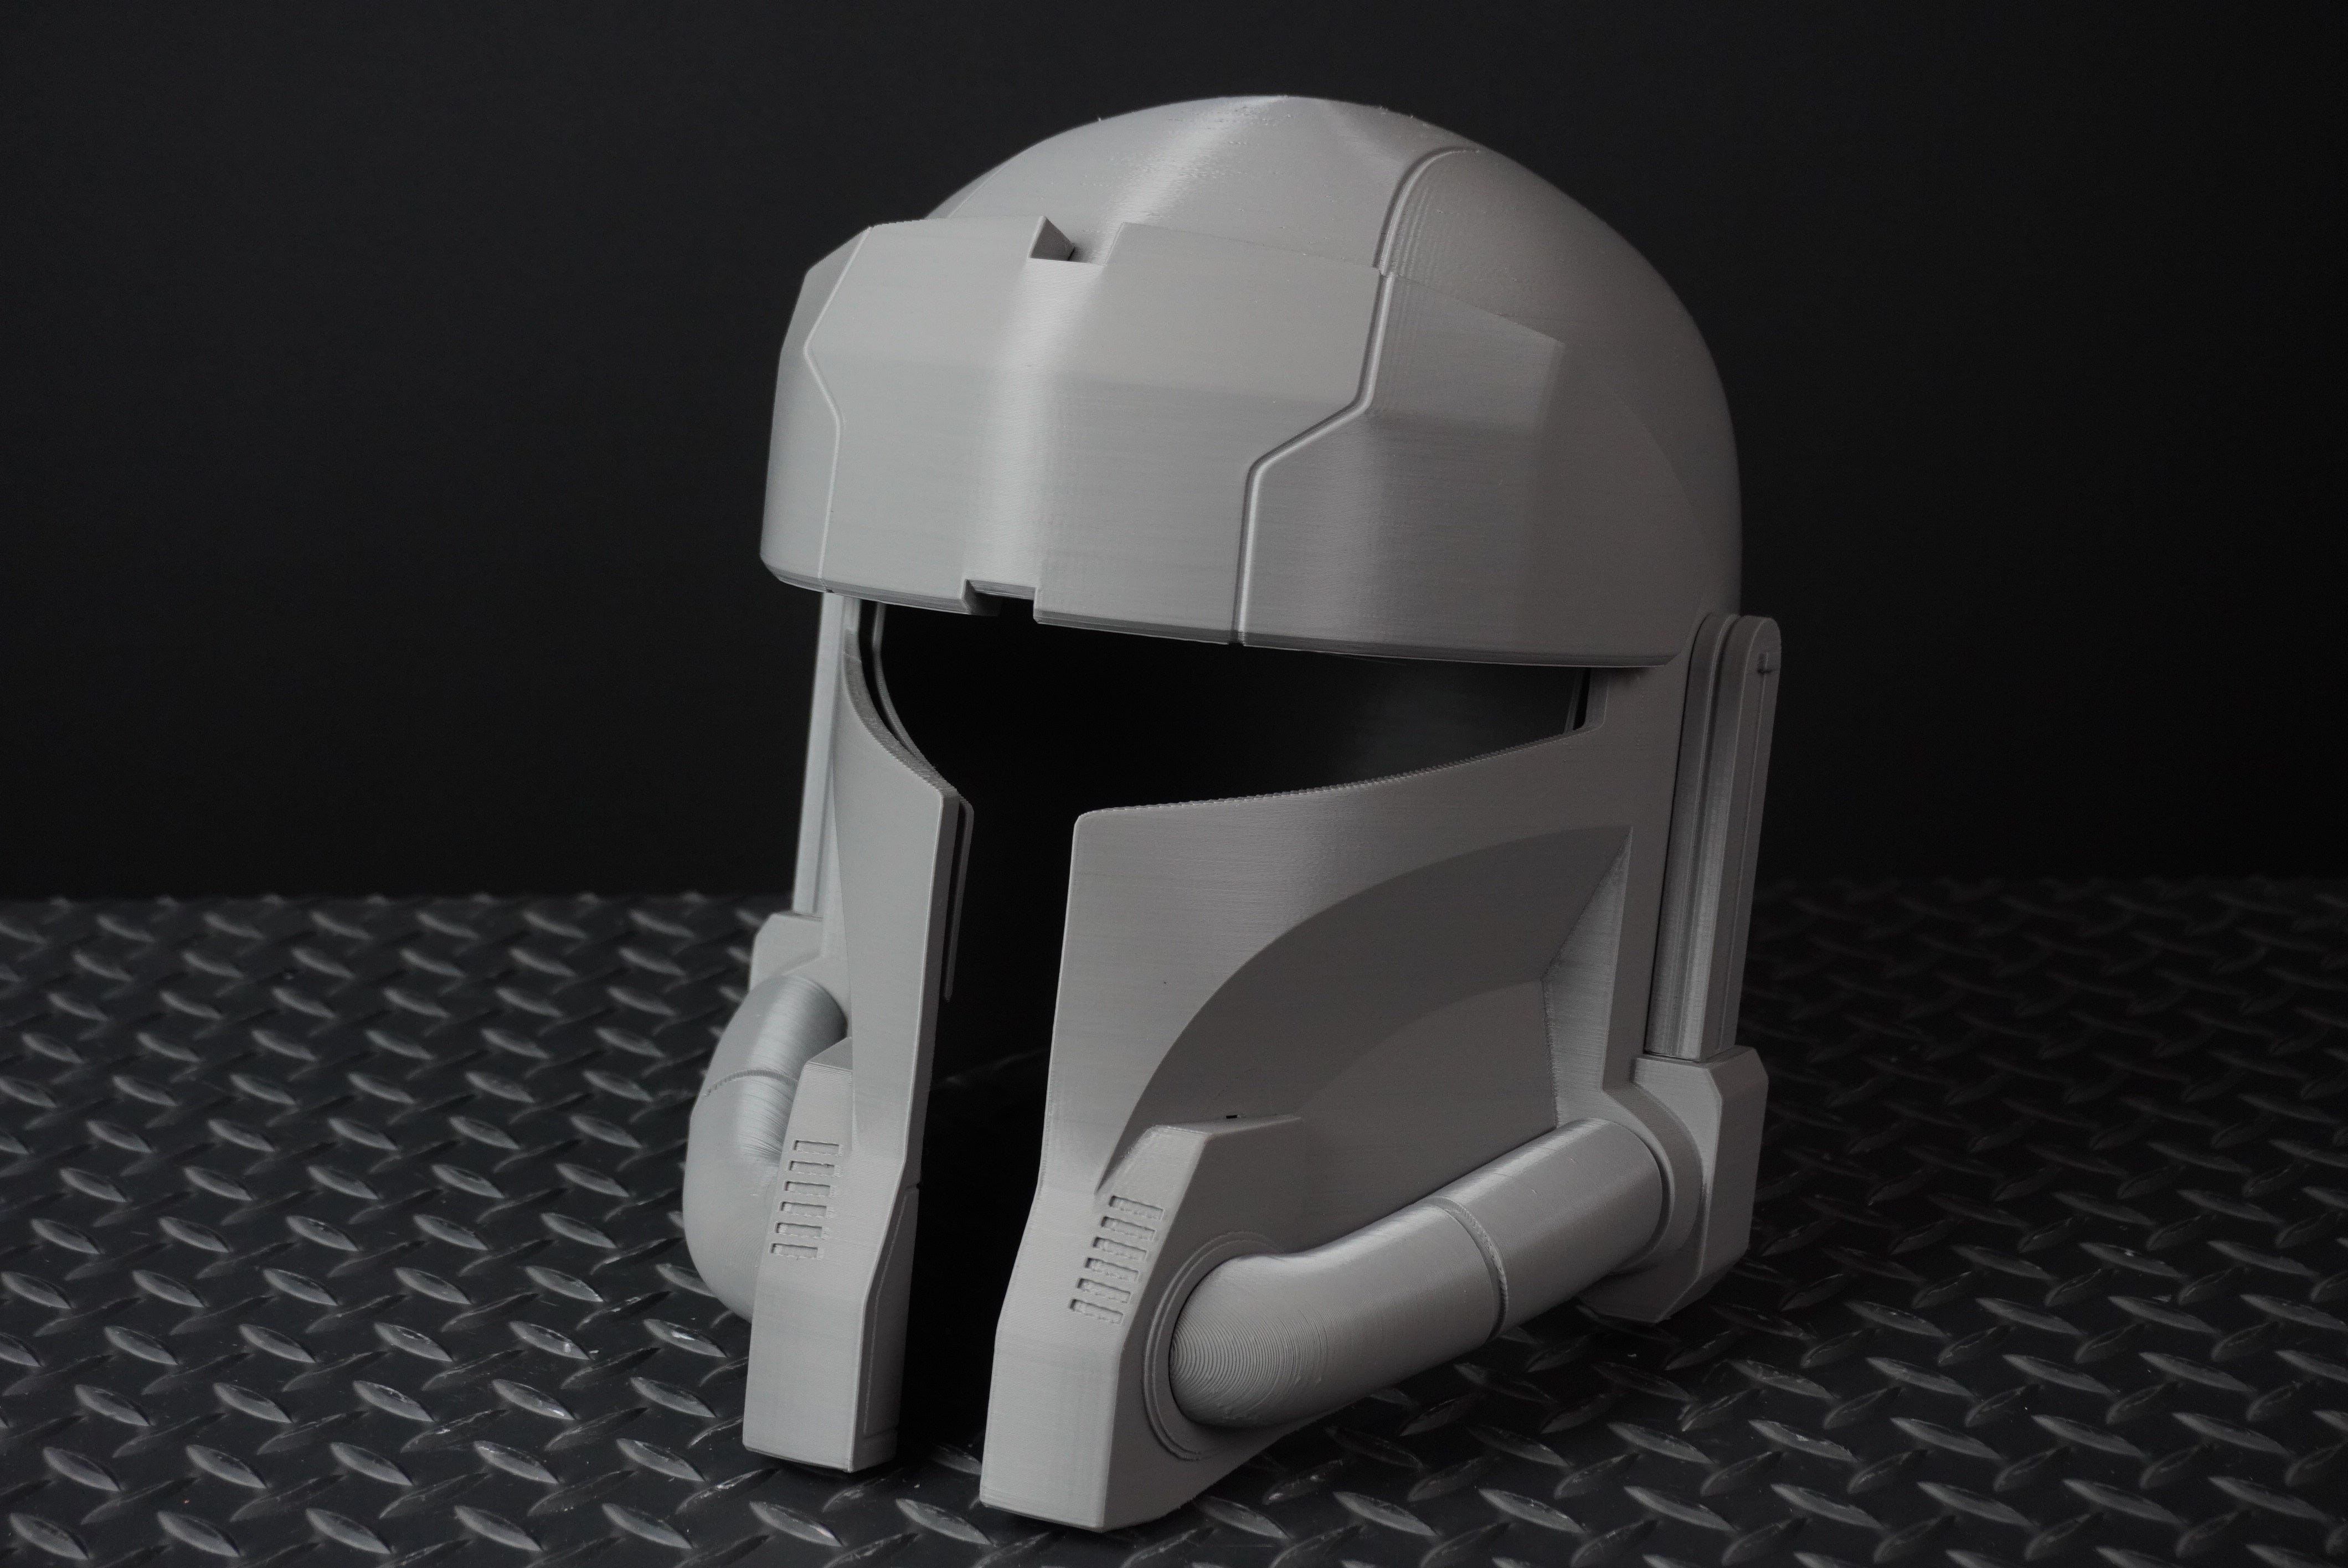 3D Printed 3 Mandalorian Helmet Star Wars Silver PLA Plastic